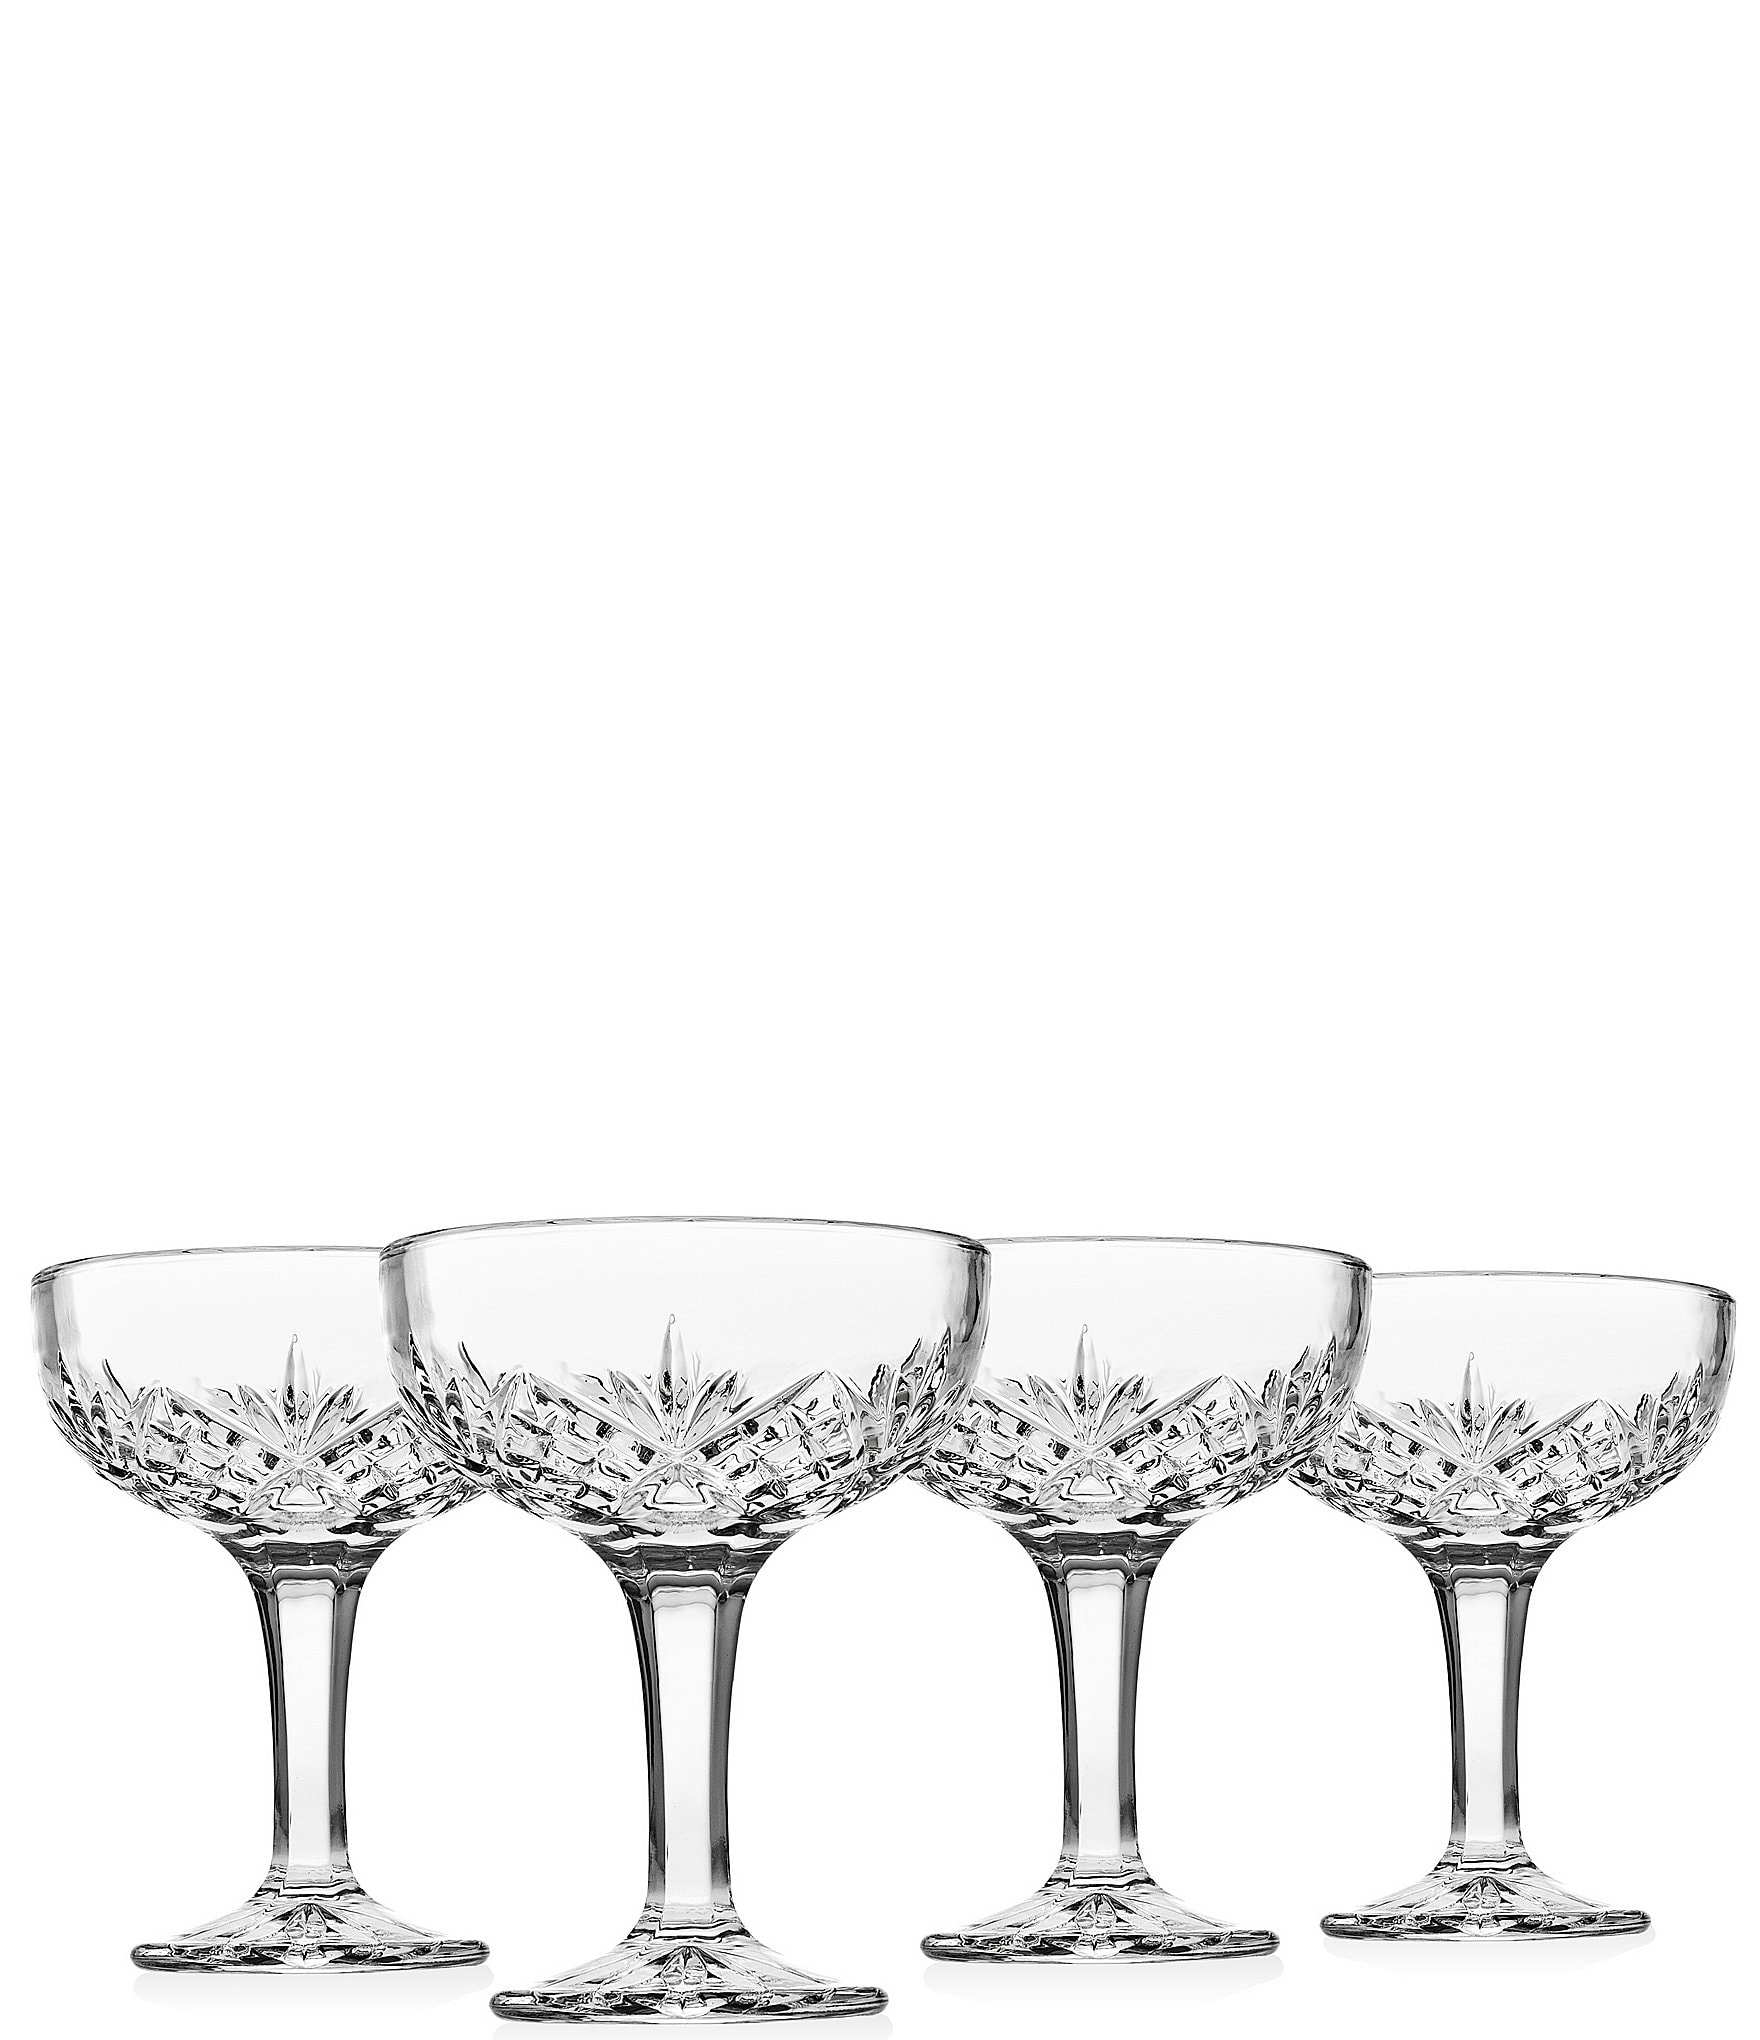 Godinger Dublin Champagne Coupe Crystal Glass Set of 4